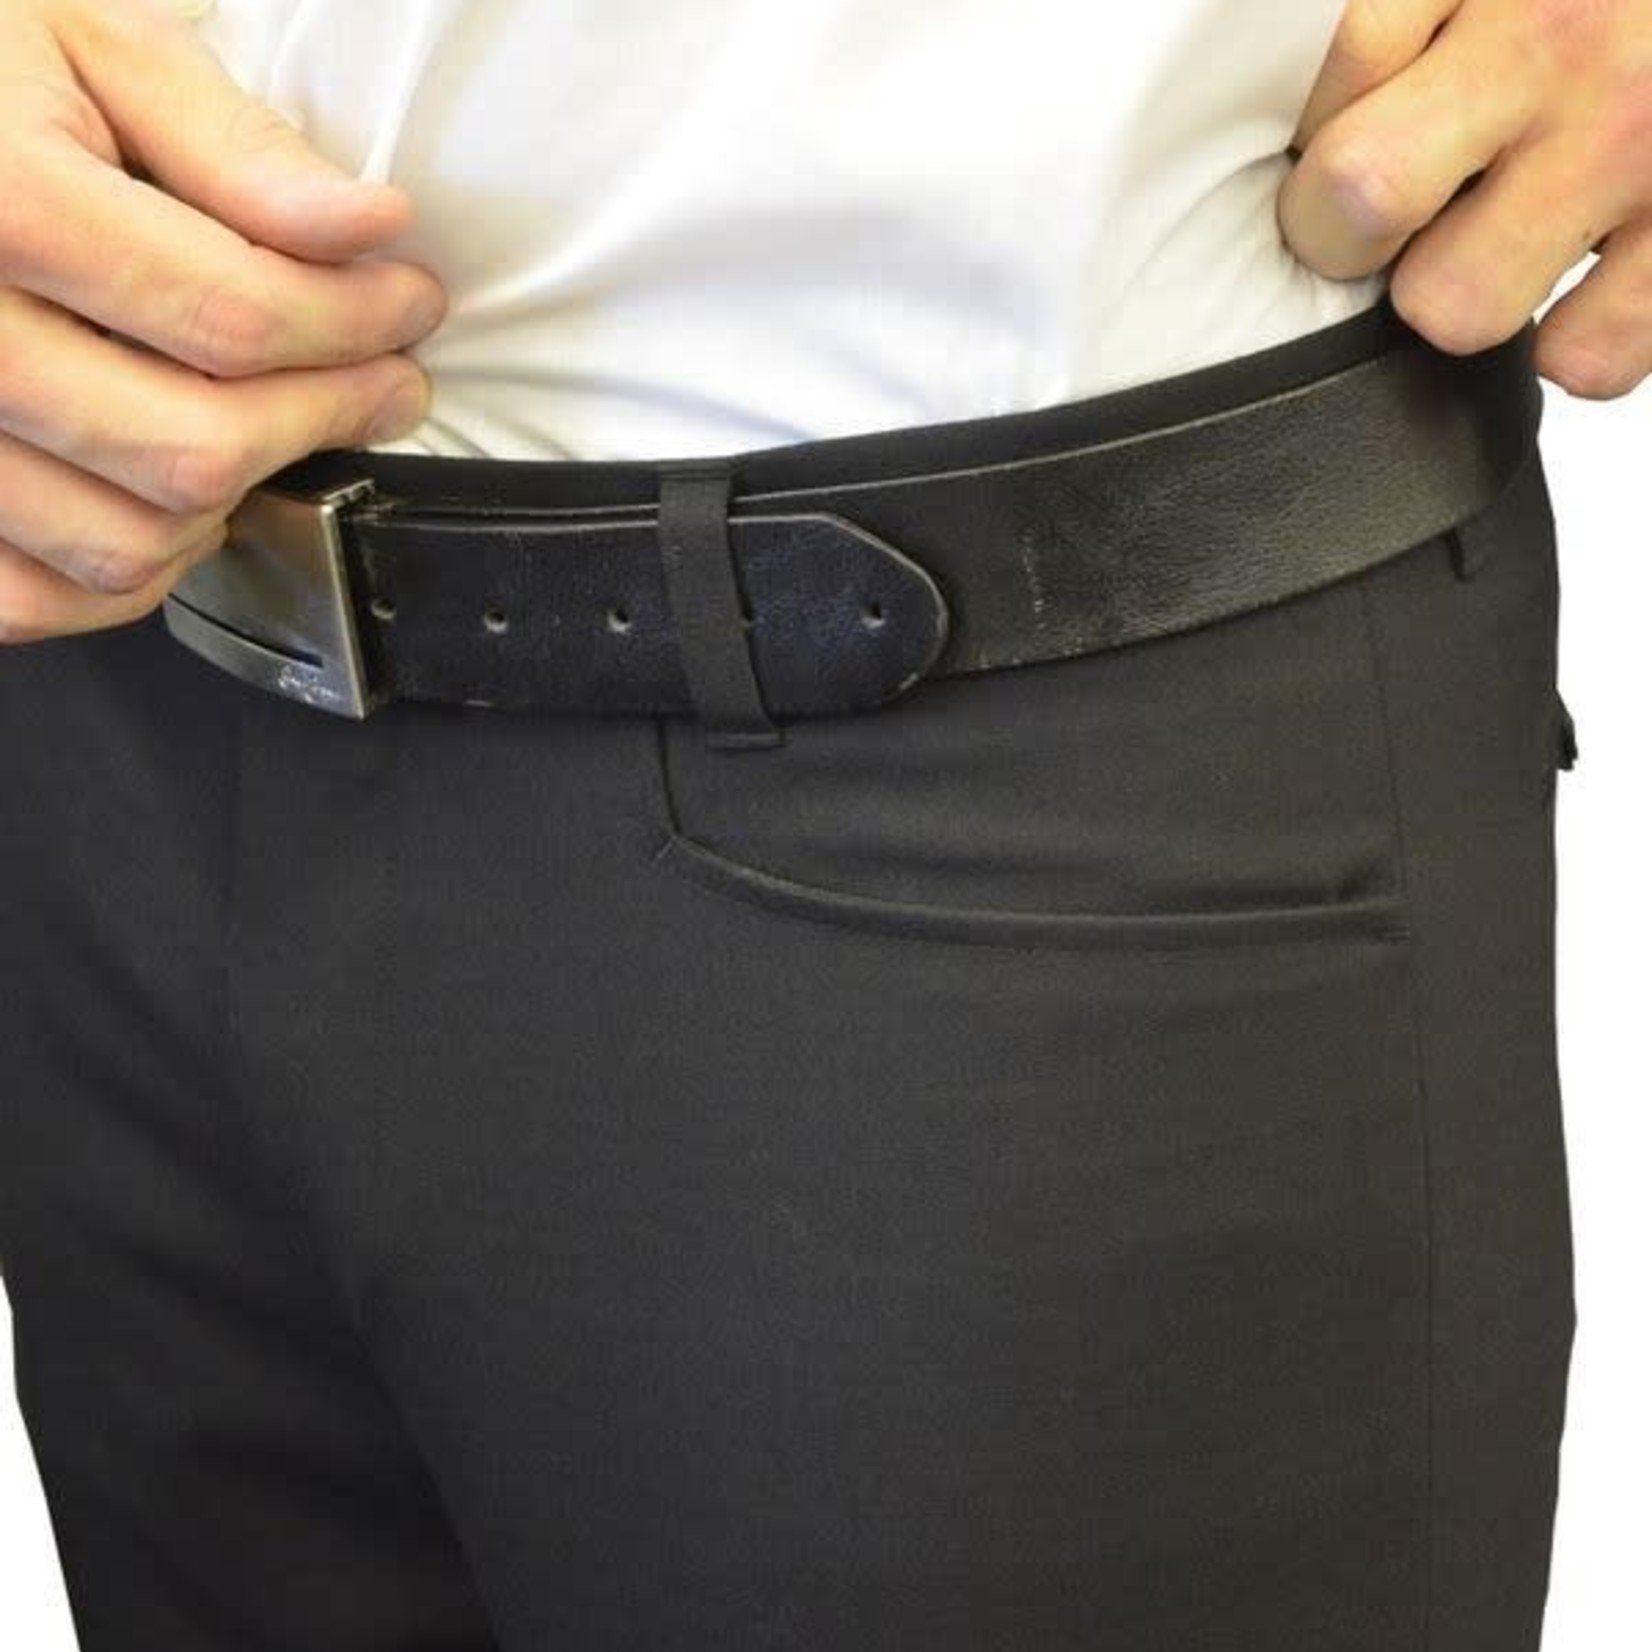 J Grill J.GRILL Trousers – Daniel Style (Full Top Pocket)